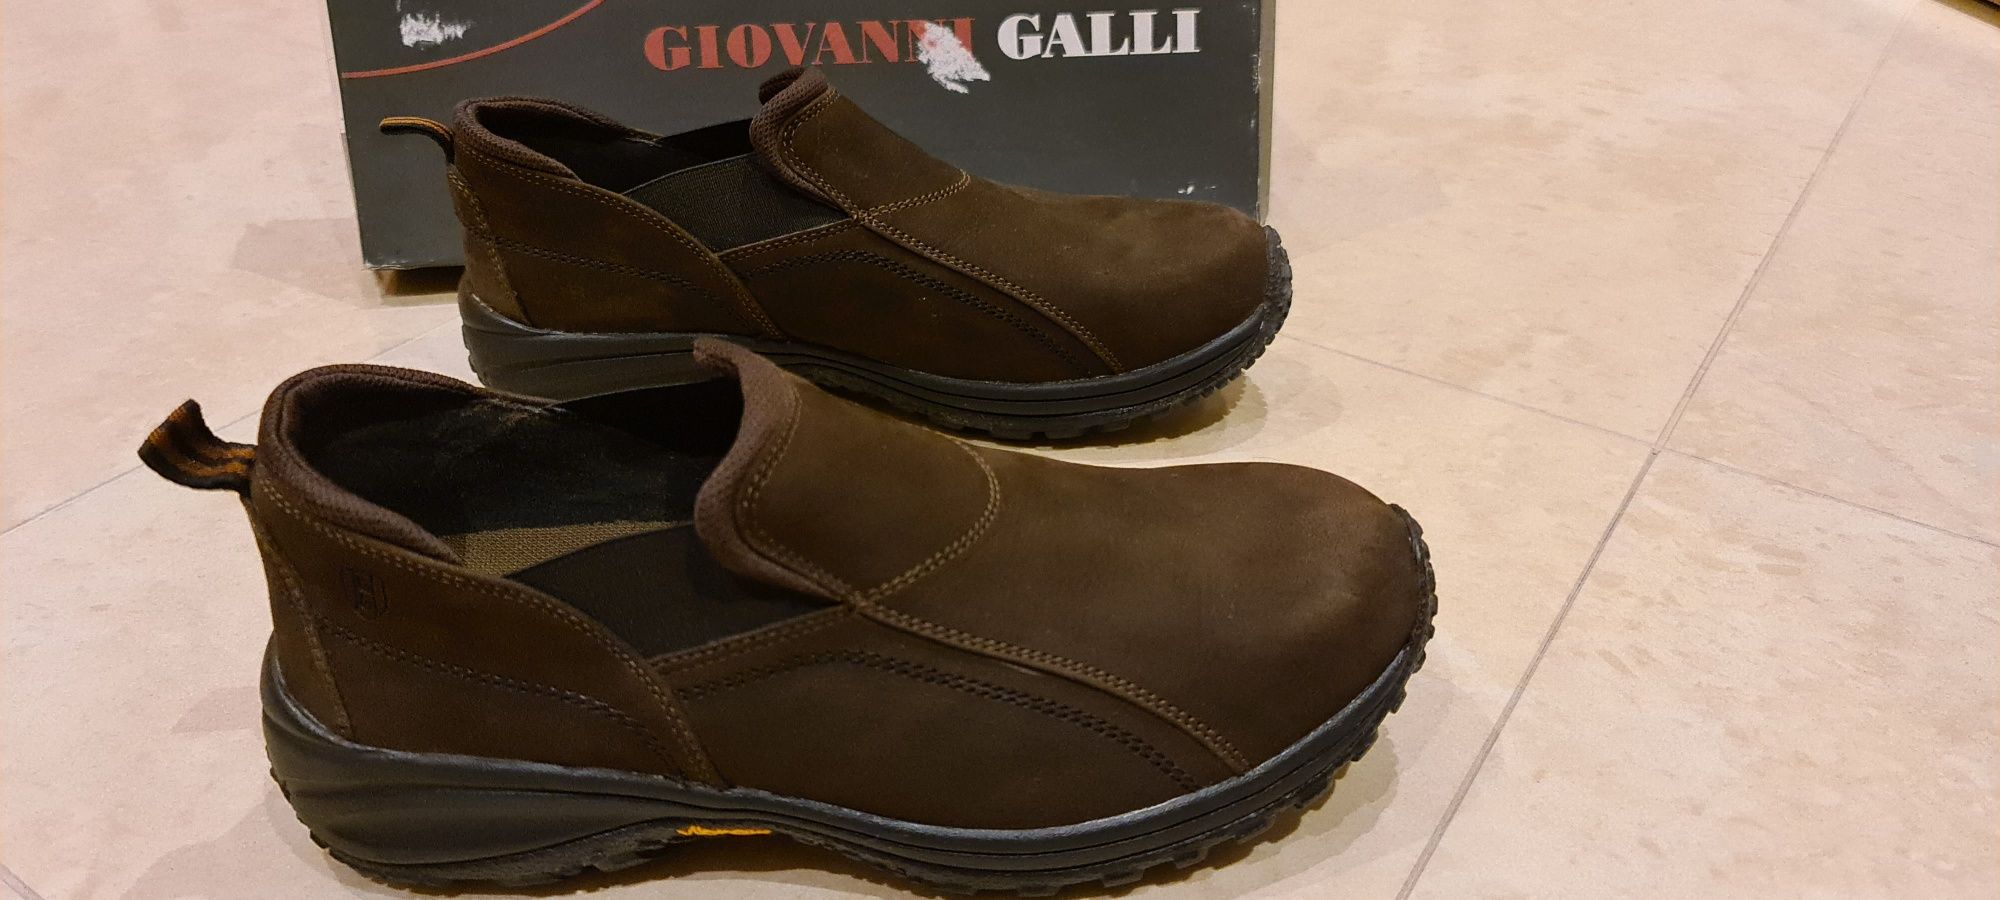 Sapatos Desportivos Giovanni Galli tamanho 39